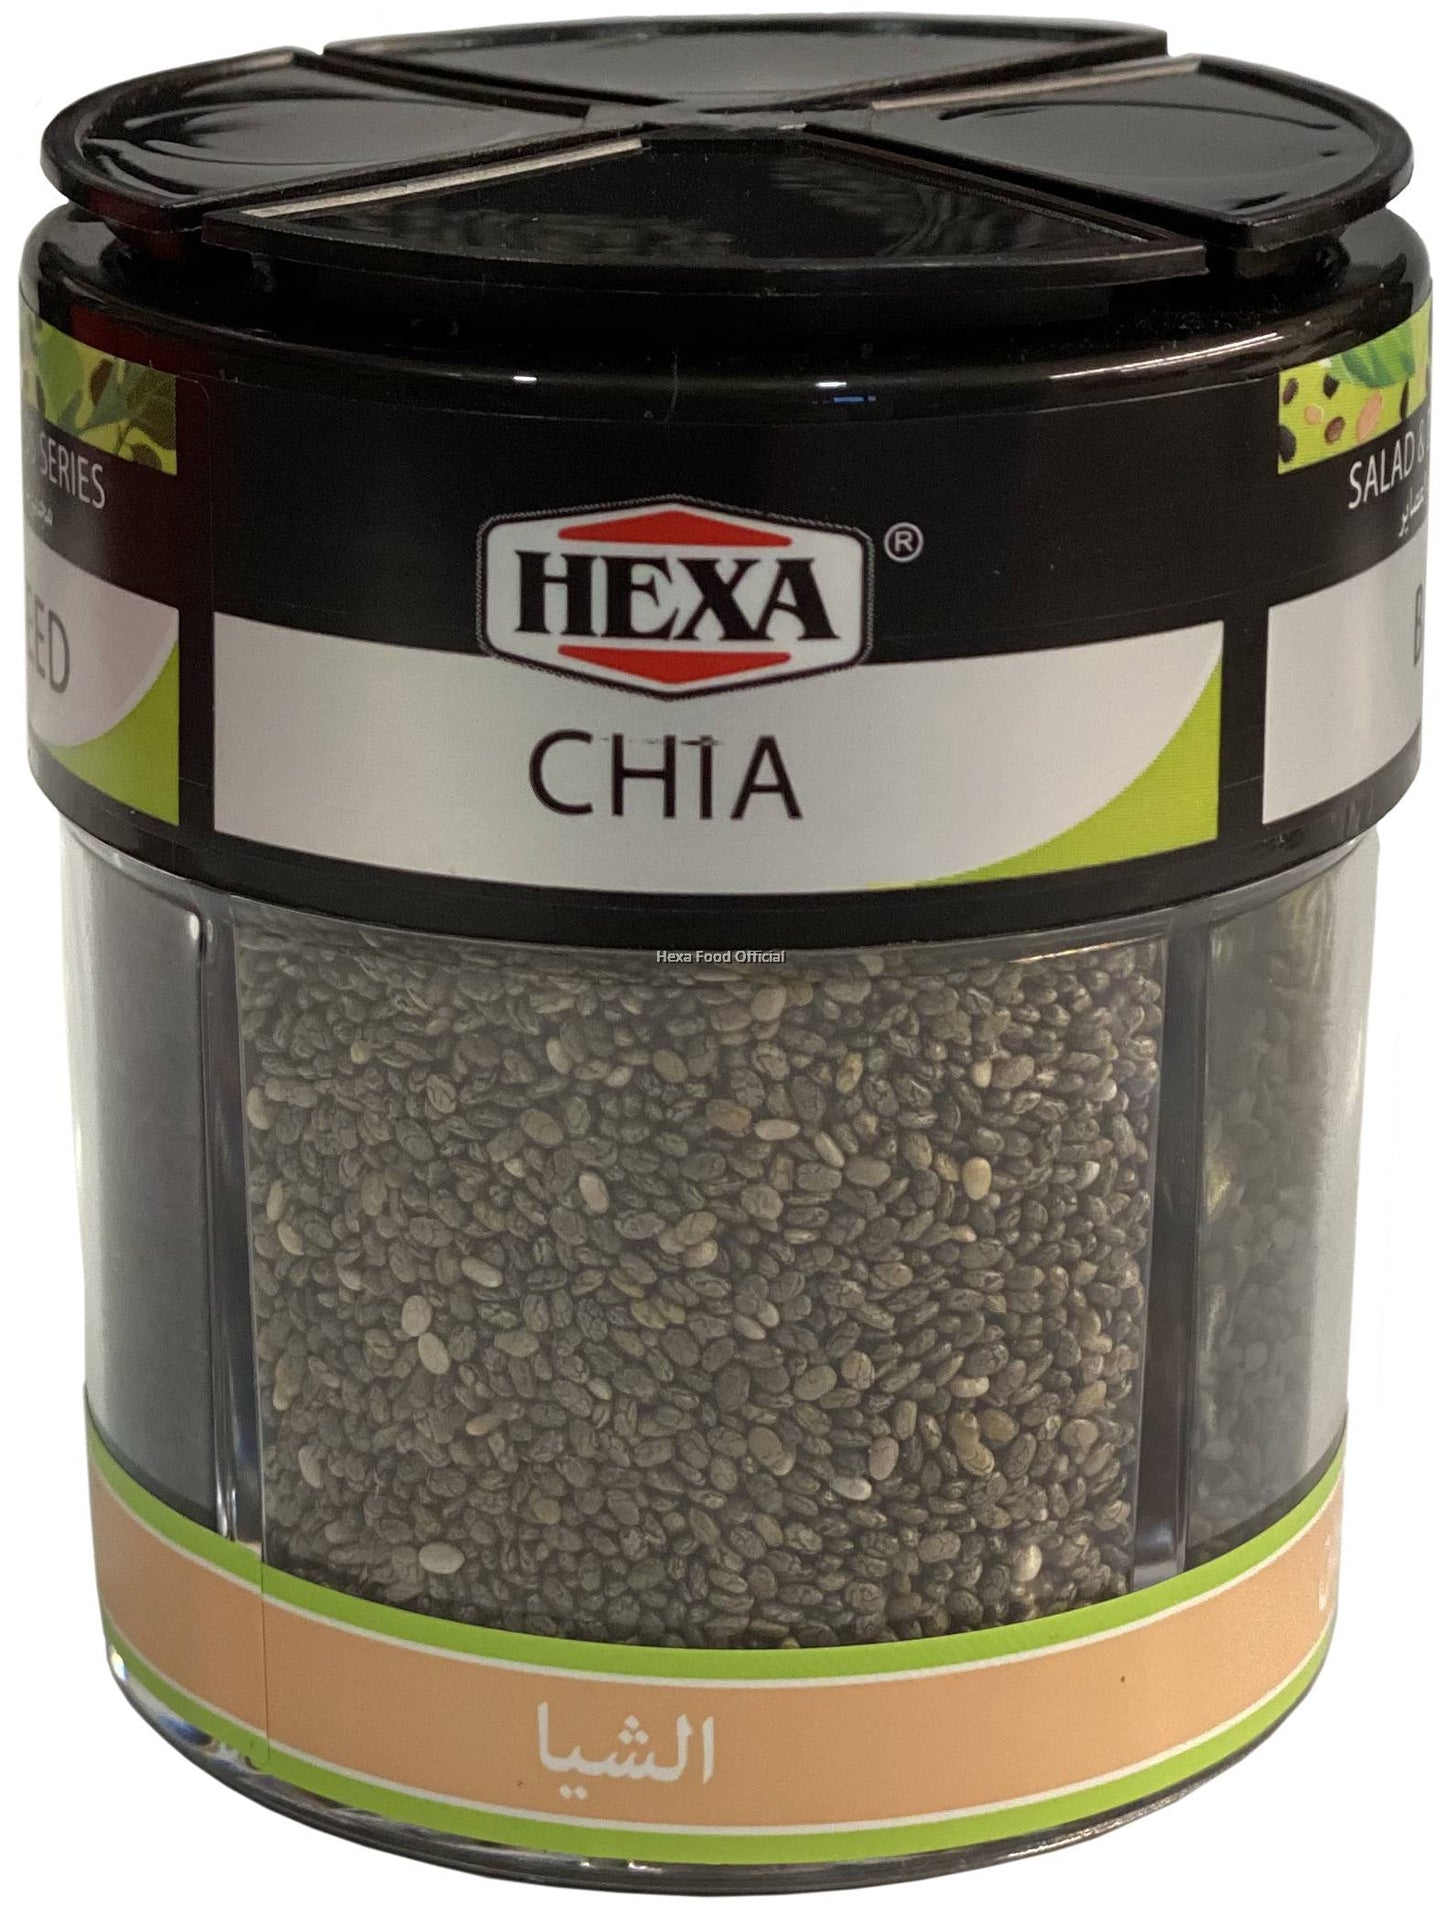 HEXA HALAL Salad & Drinks 4 IN 1 Seed Series 70gm Chia / Basil / Sumac / Black Seed